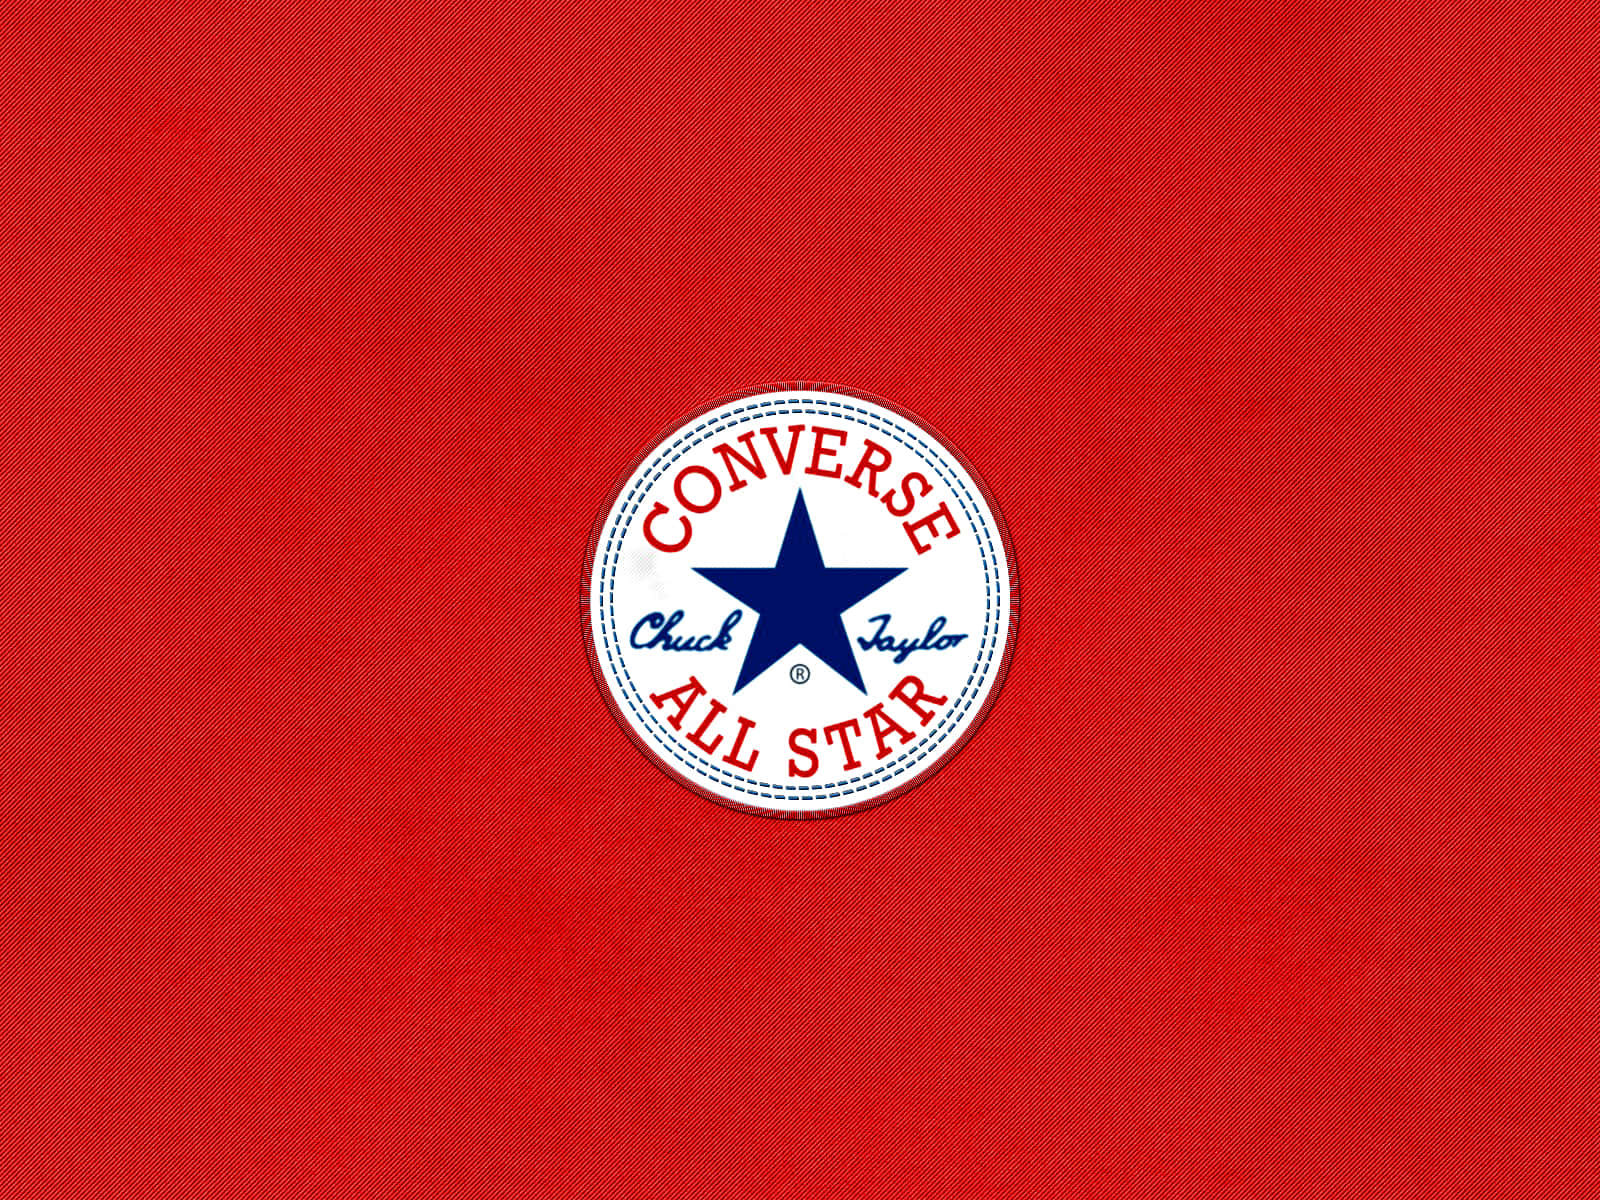 The classic Converse Logo